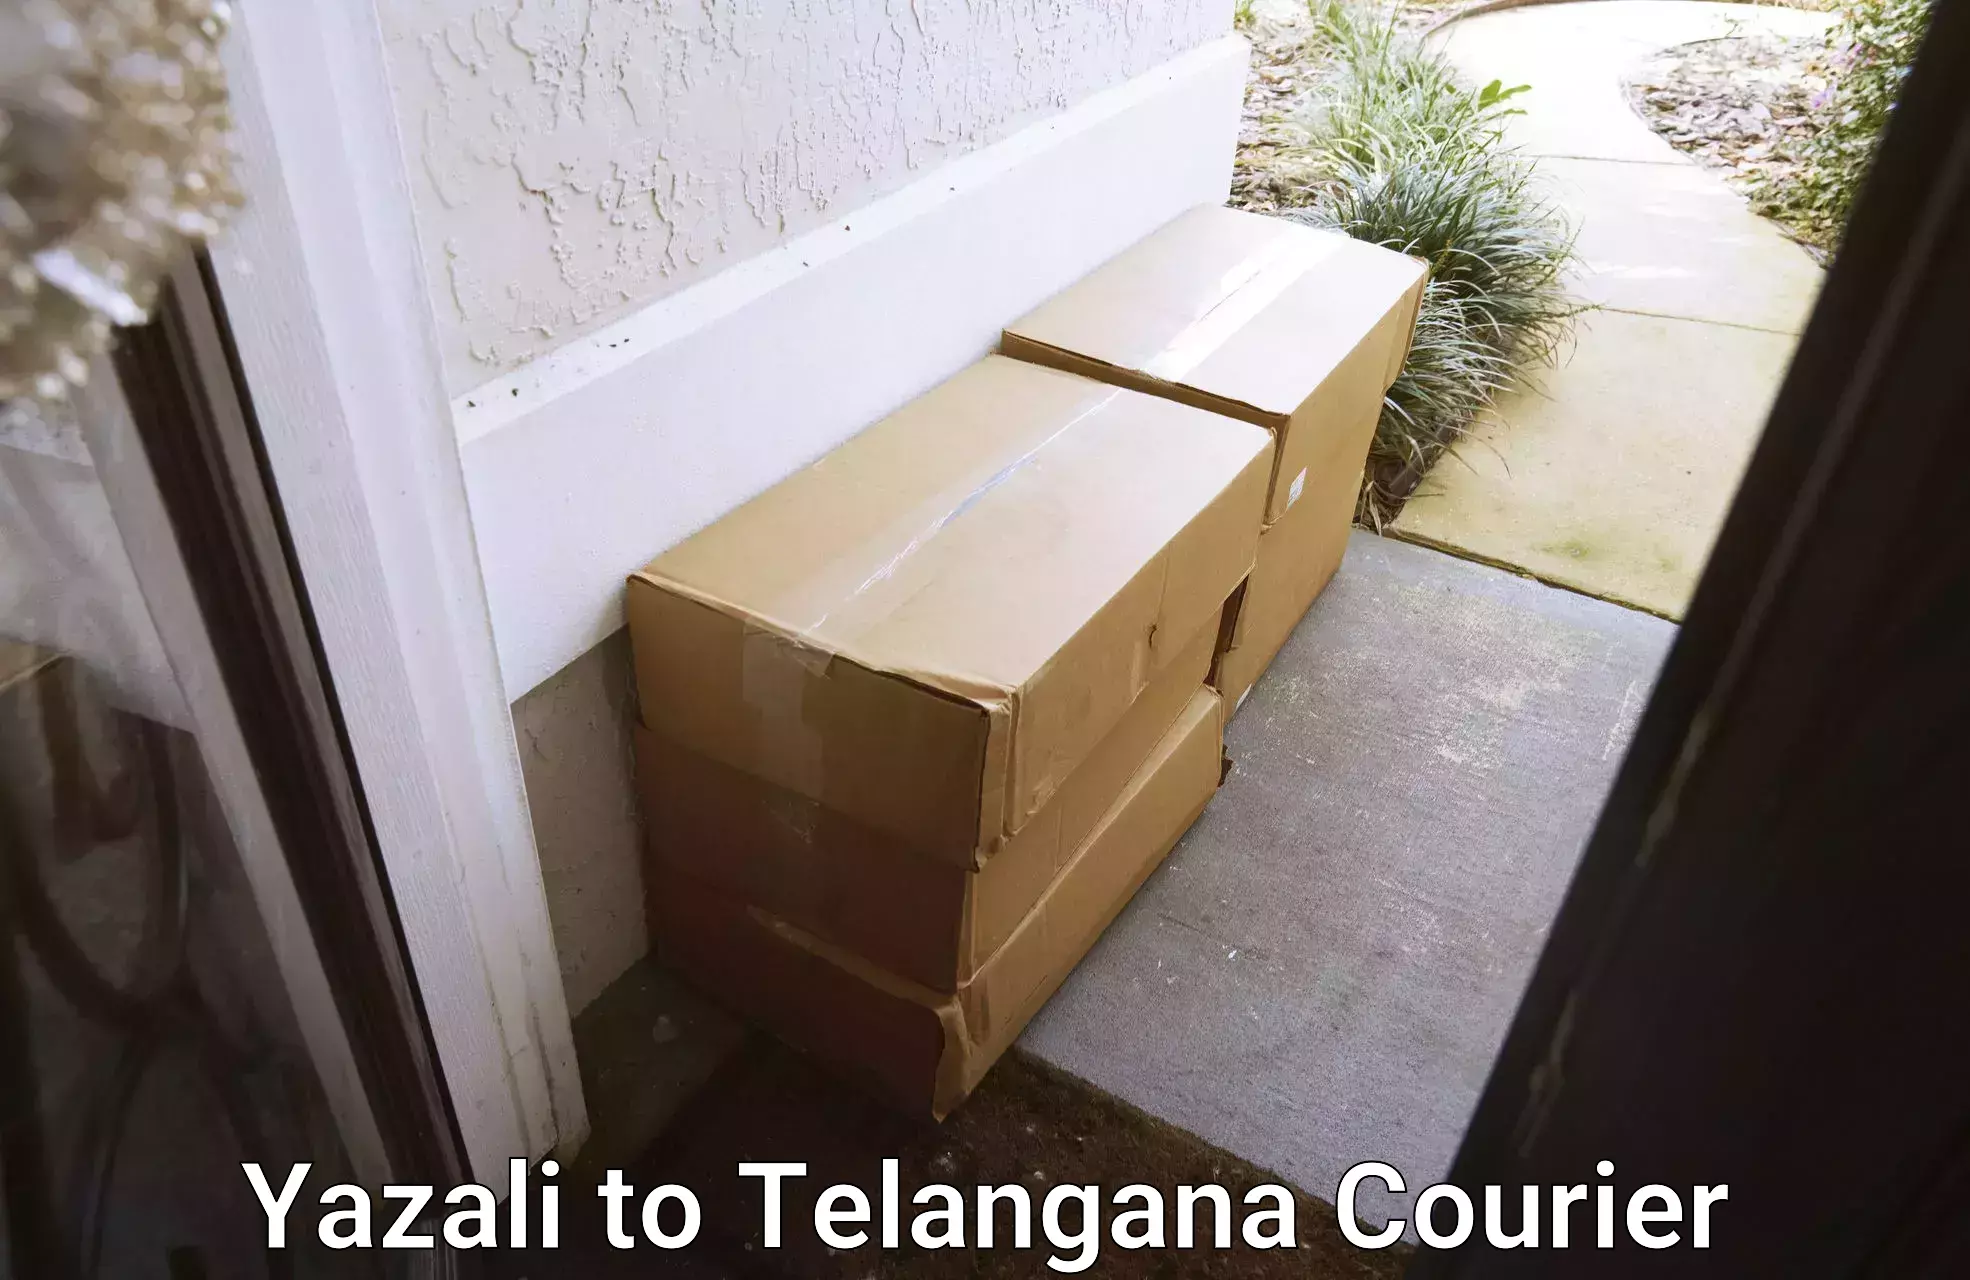 Multi-national courier services Yazali to Nalgonda